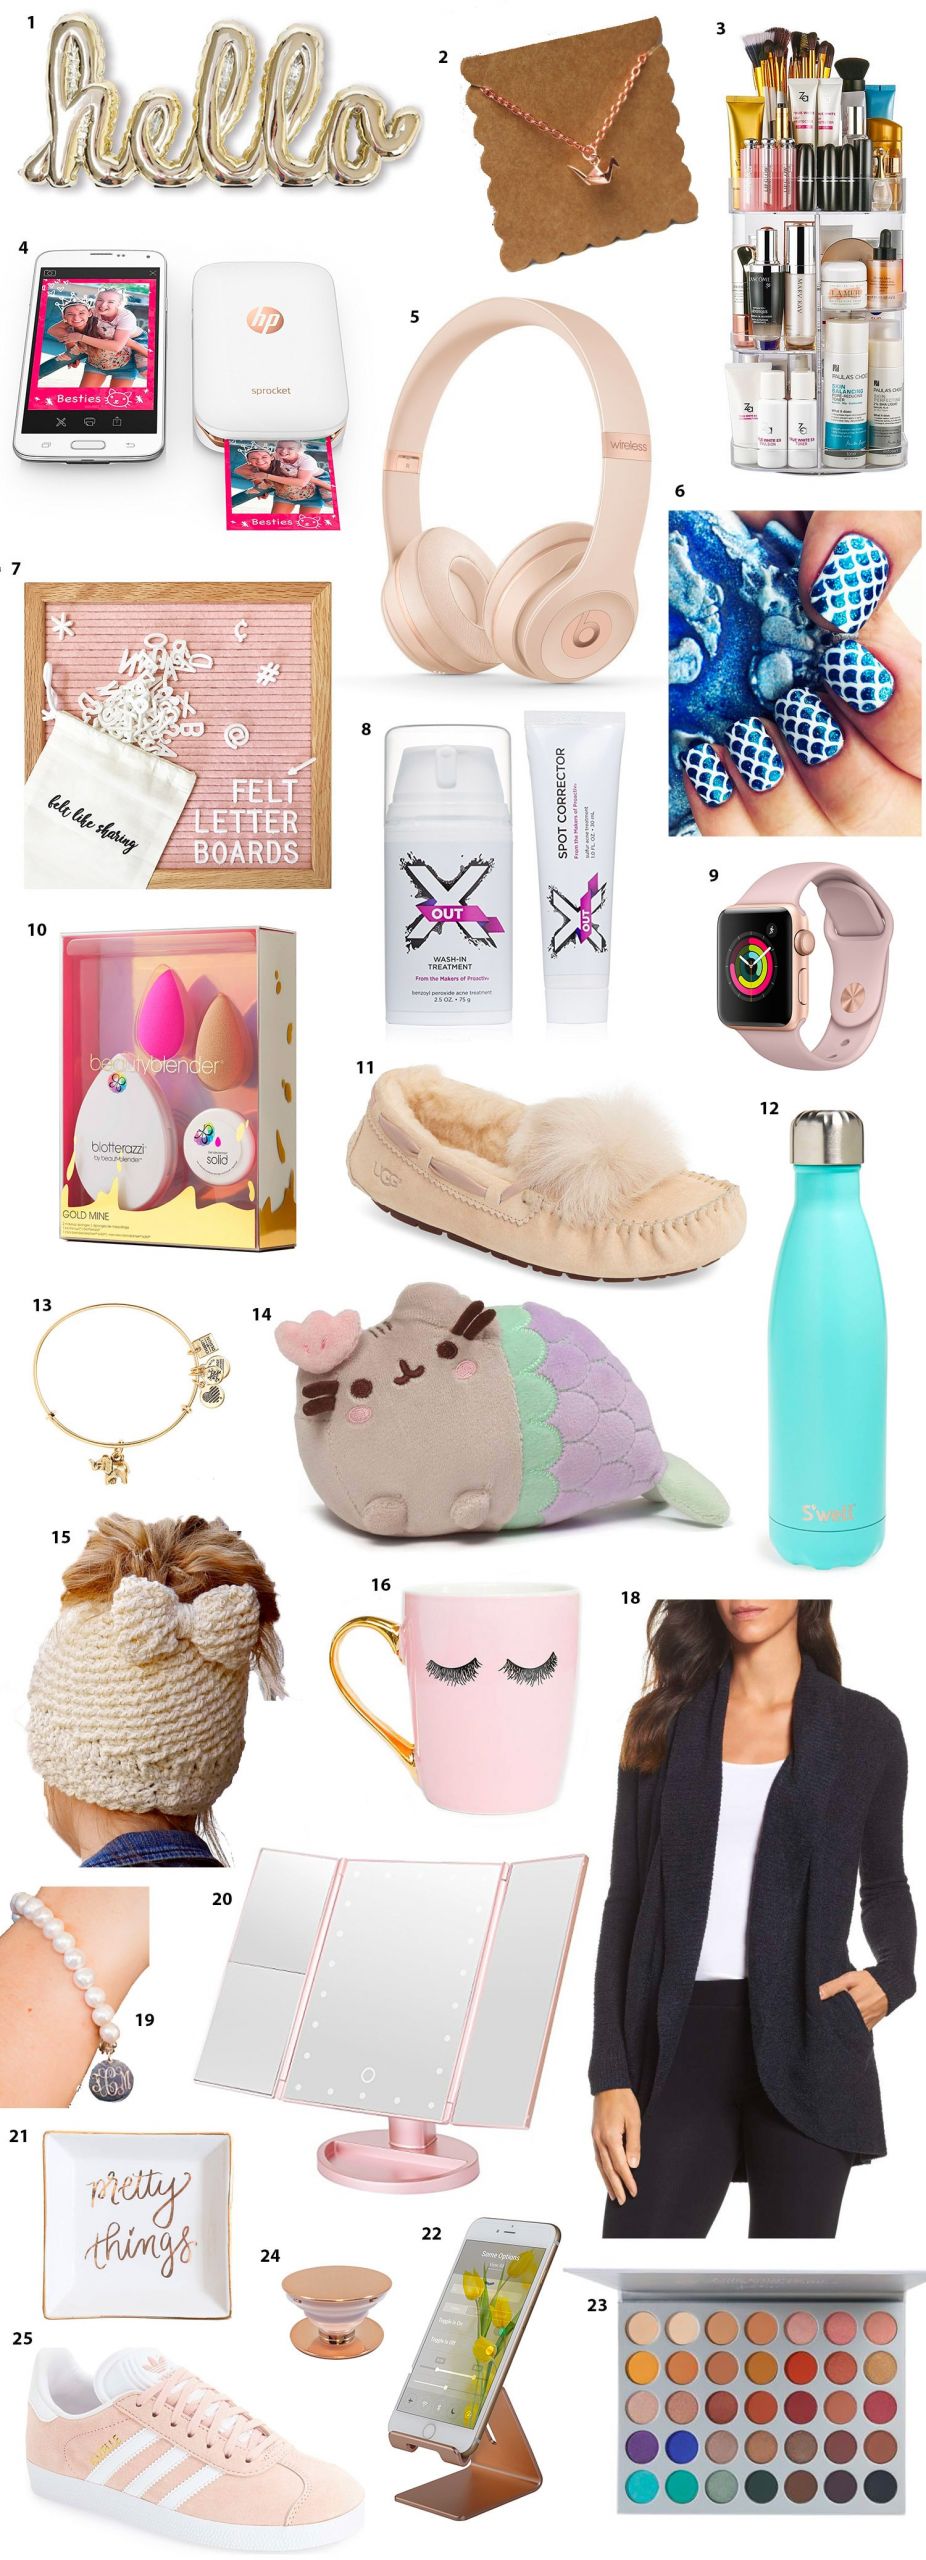 Christmas Gift Idea Teenage Girls
 Top Gifts for Teens This Christmas